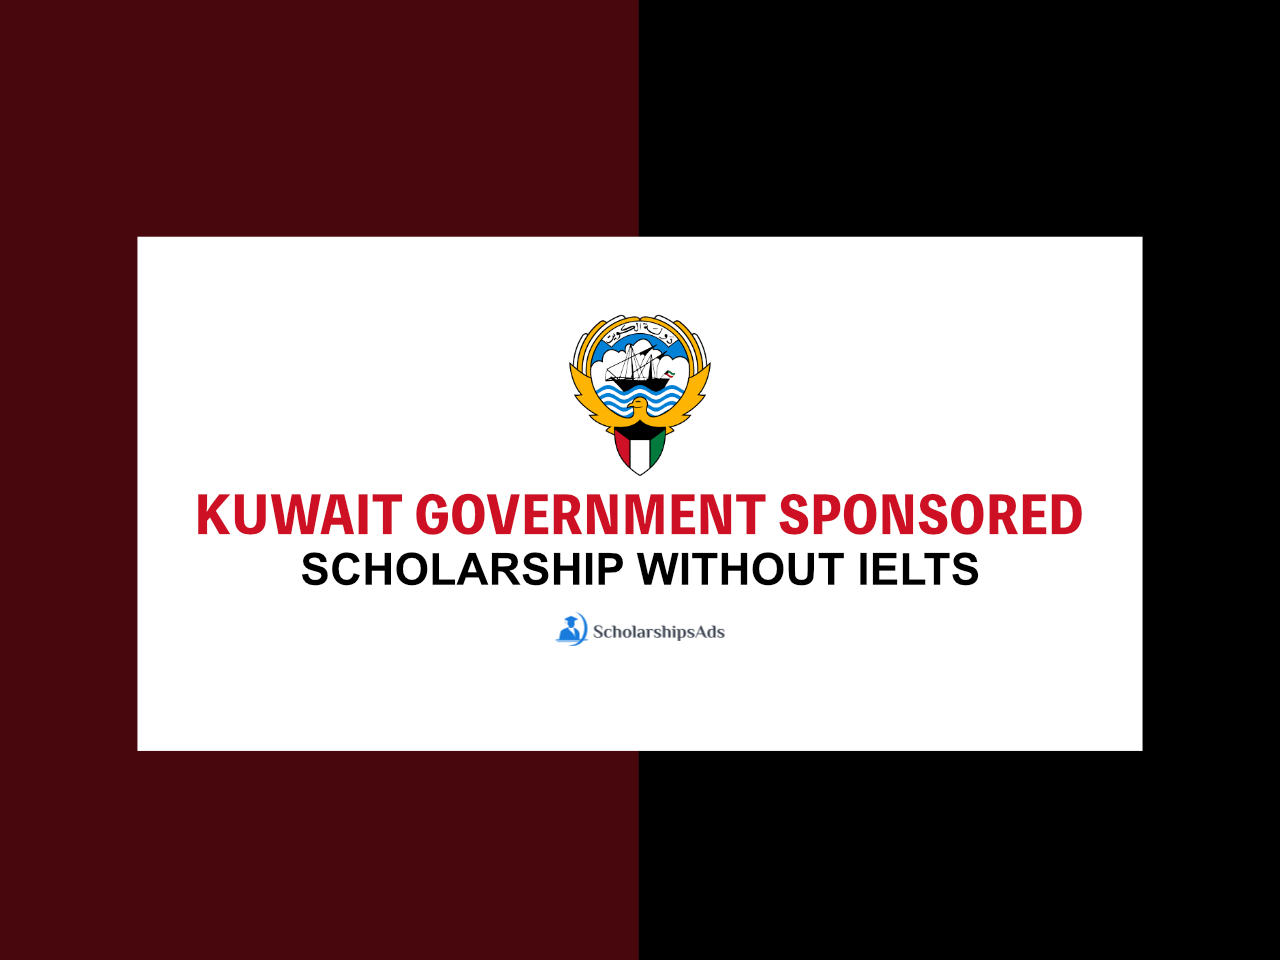 Kuwait Government Sponsored Scholarships.